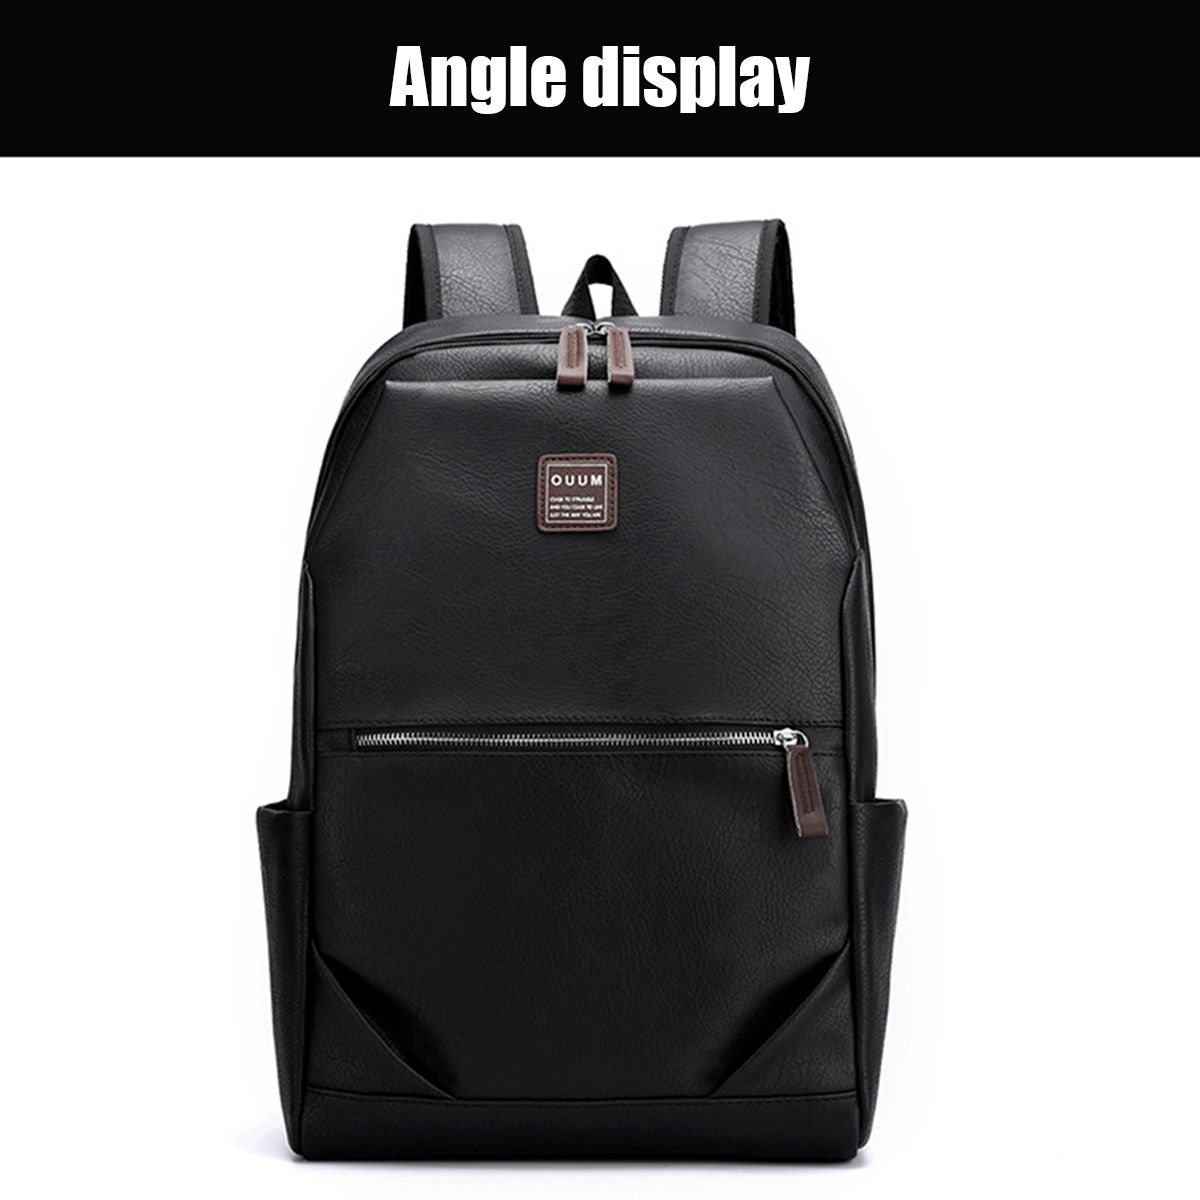 156-Inch-Zipper-PU-Laptop-Bag-Business-Travel-Portable-Mens-Briefcases-Messenger-Documents-Handbags-1763173